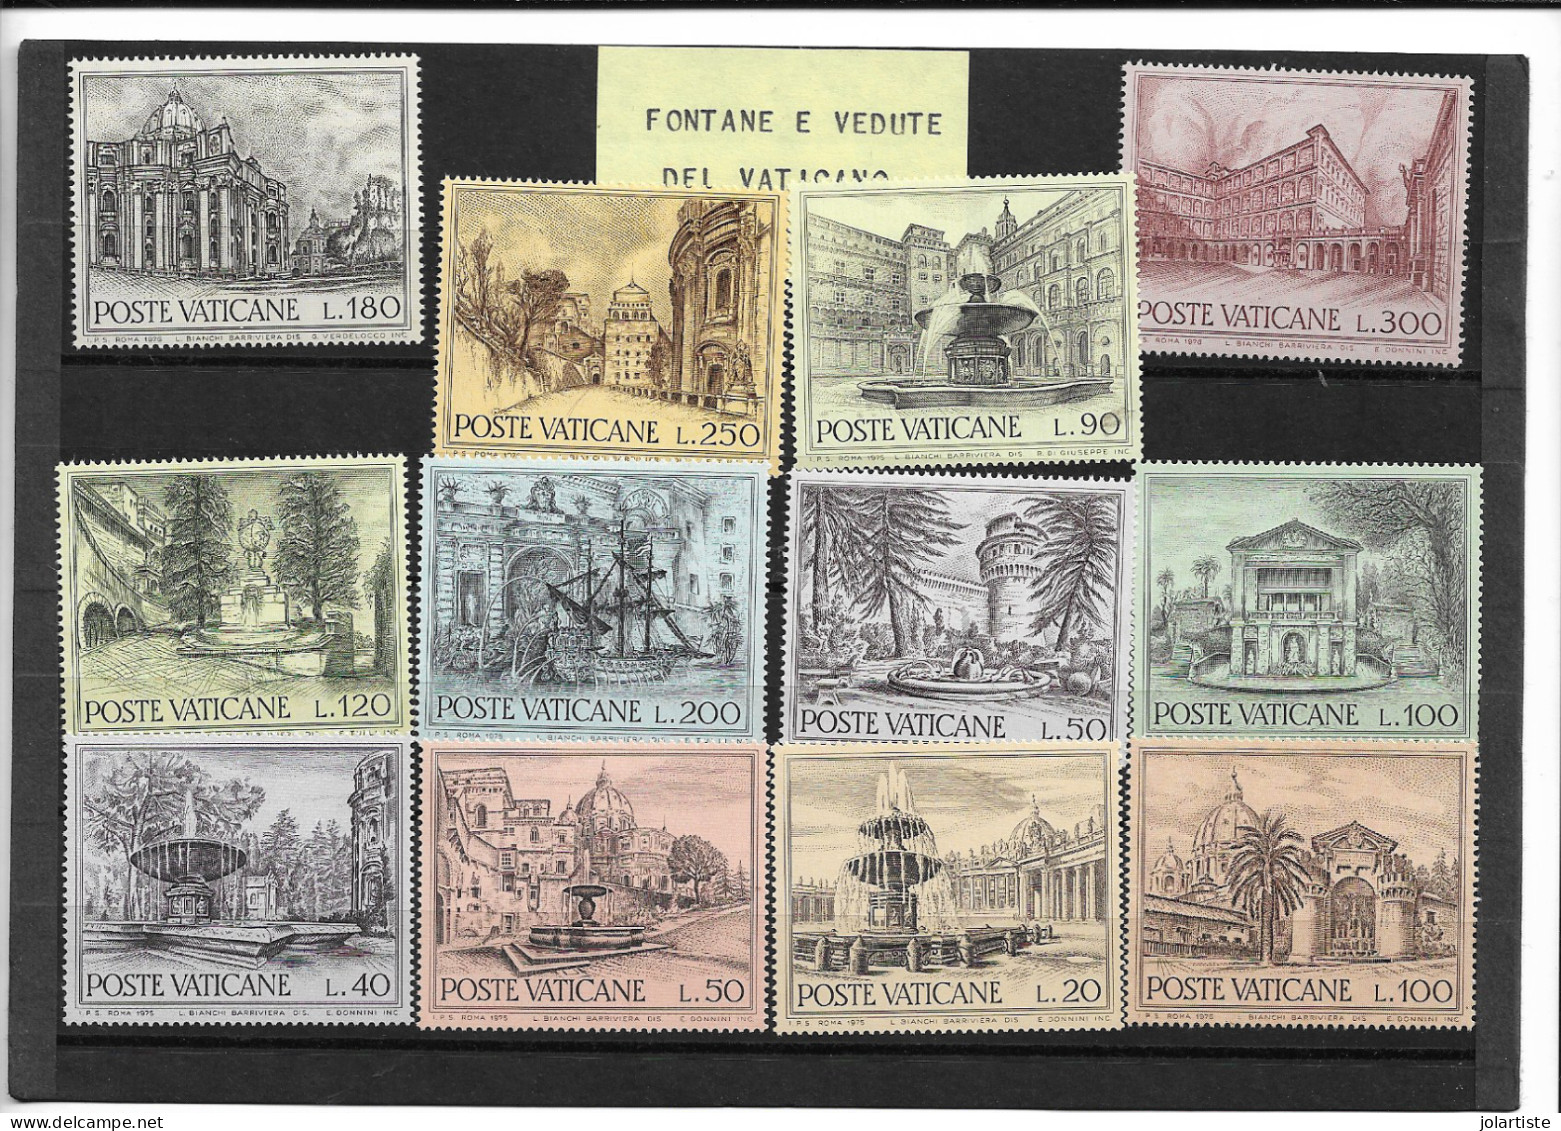 Poste Vaticane Fontane E Vedute Del Vaticano 12 Timbres Neuf 1975:76 Serie Complete Cls 3 N0166 - Unused Stamps